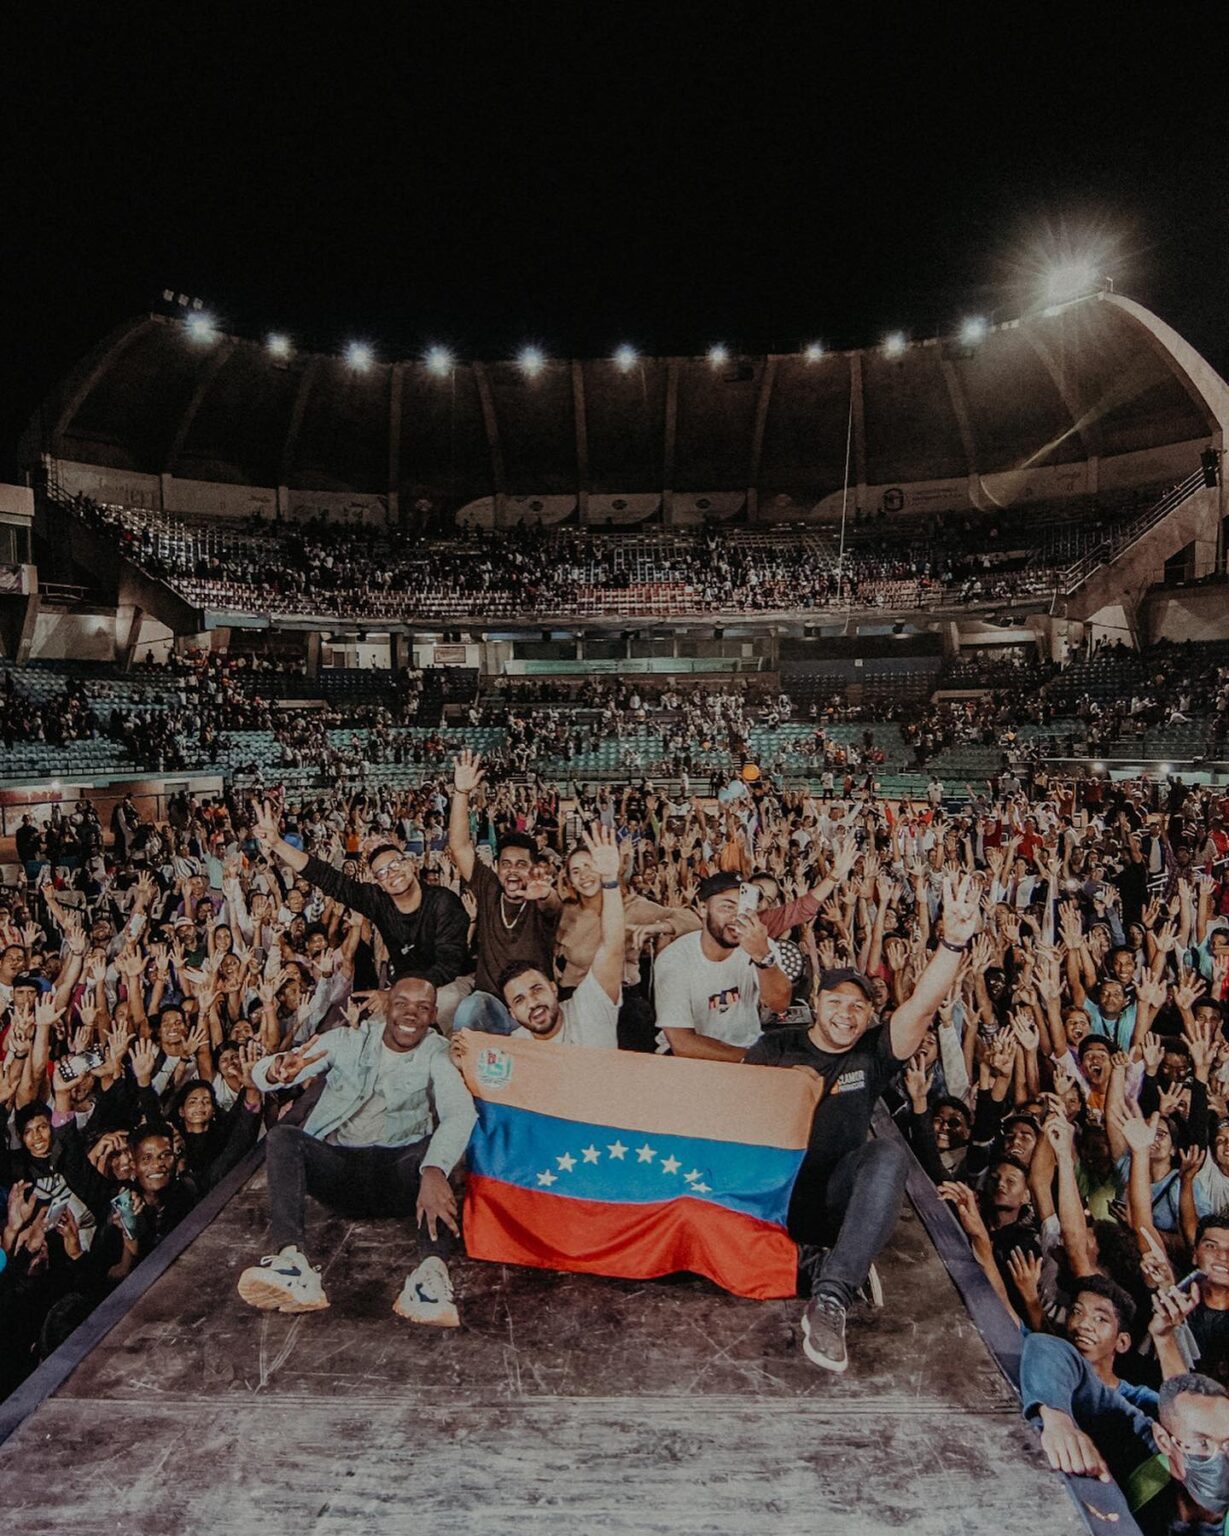 Oasis Ministry llega a Caracas hoy con su Tour Profético